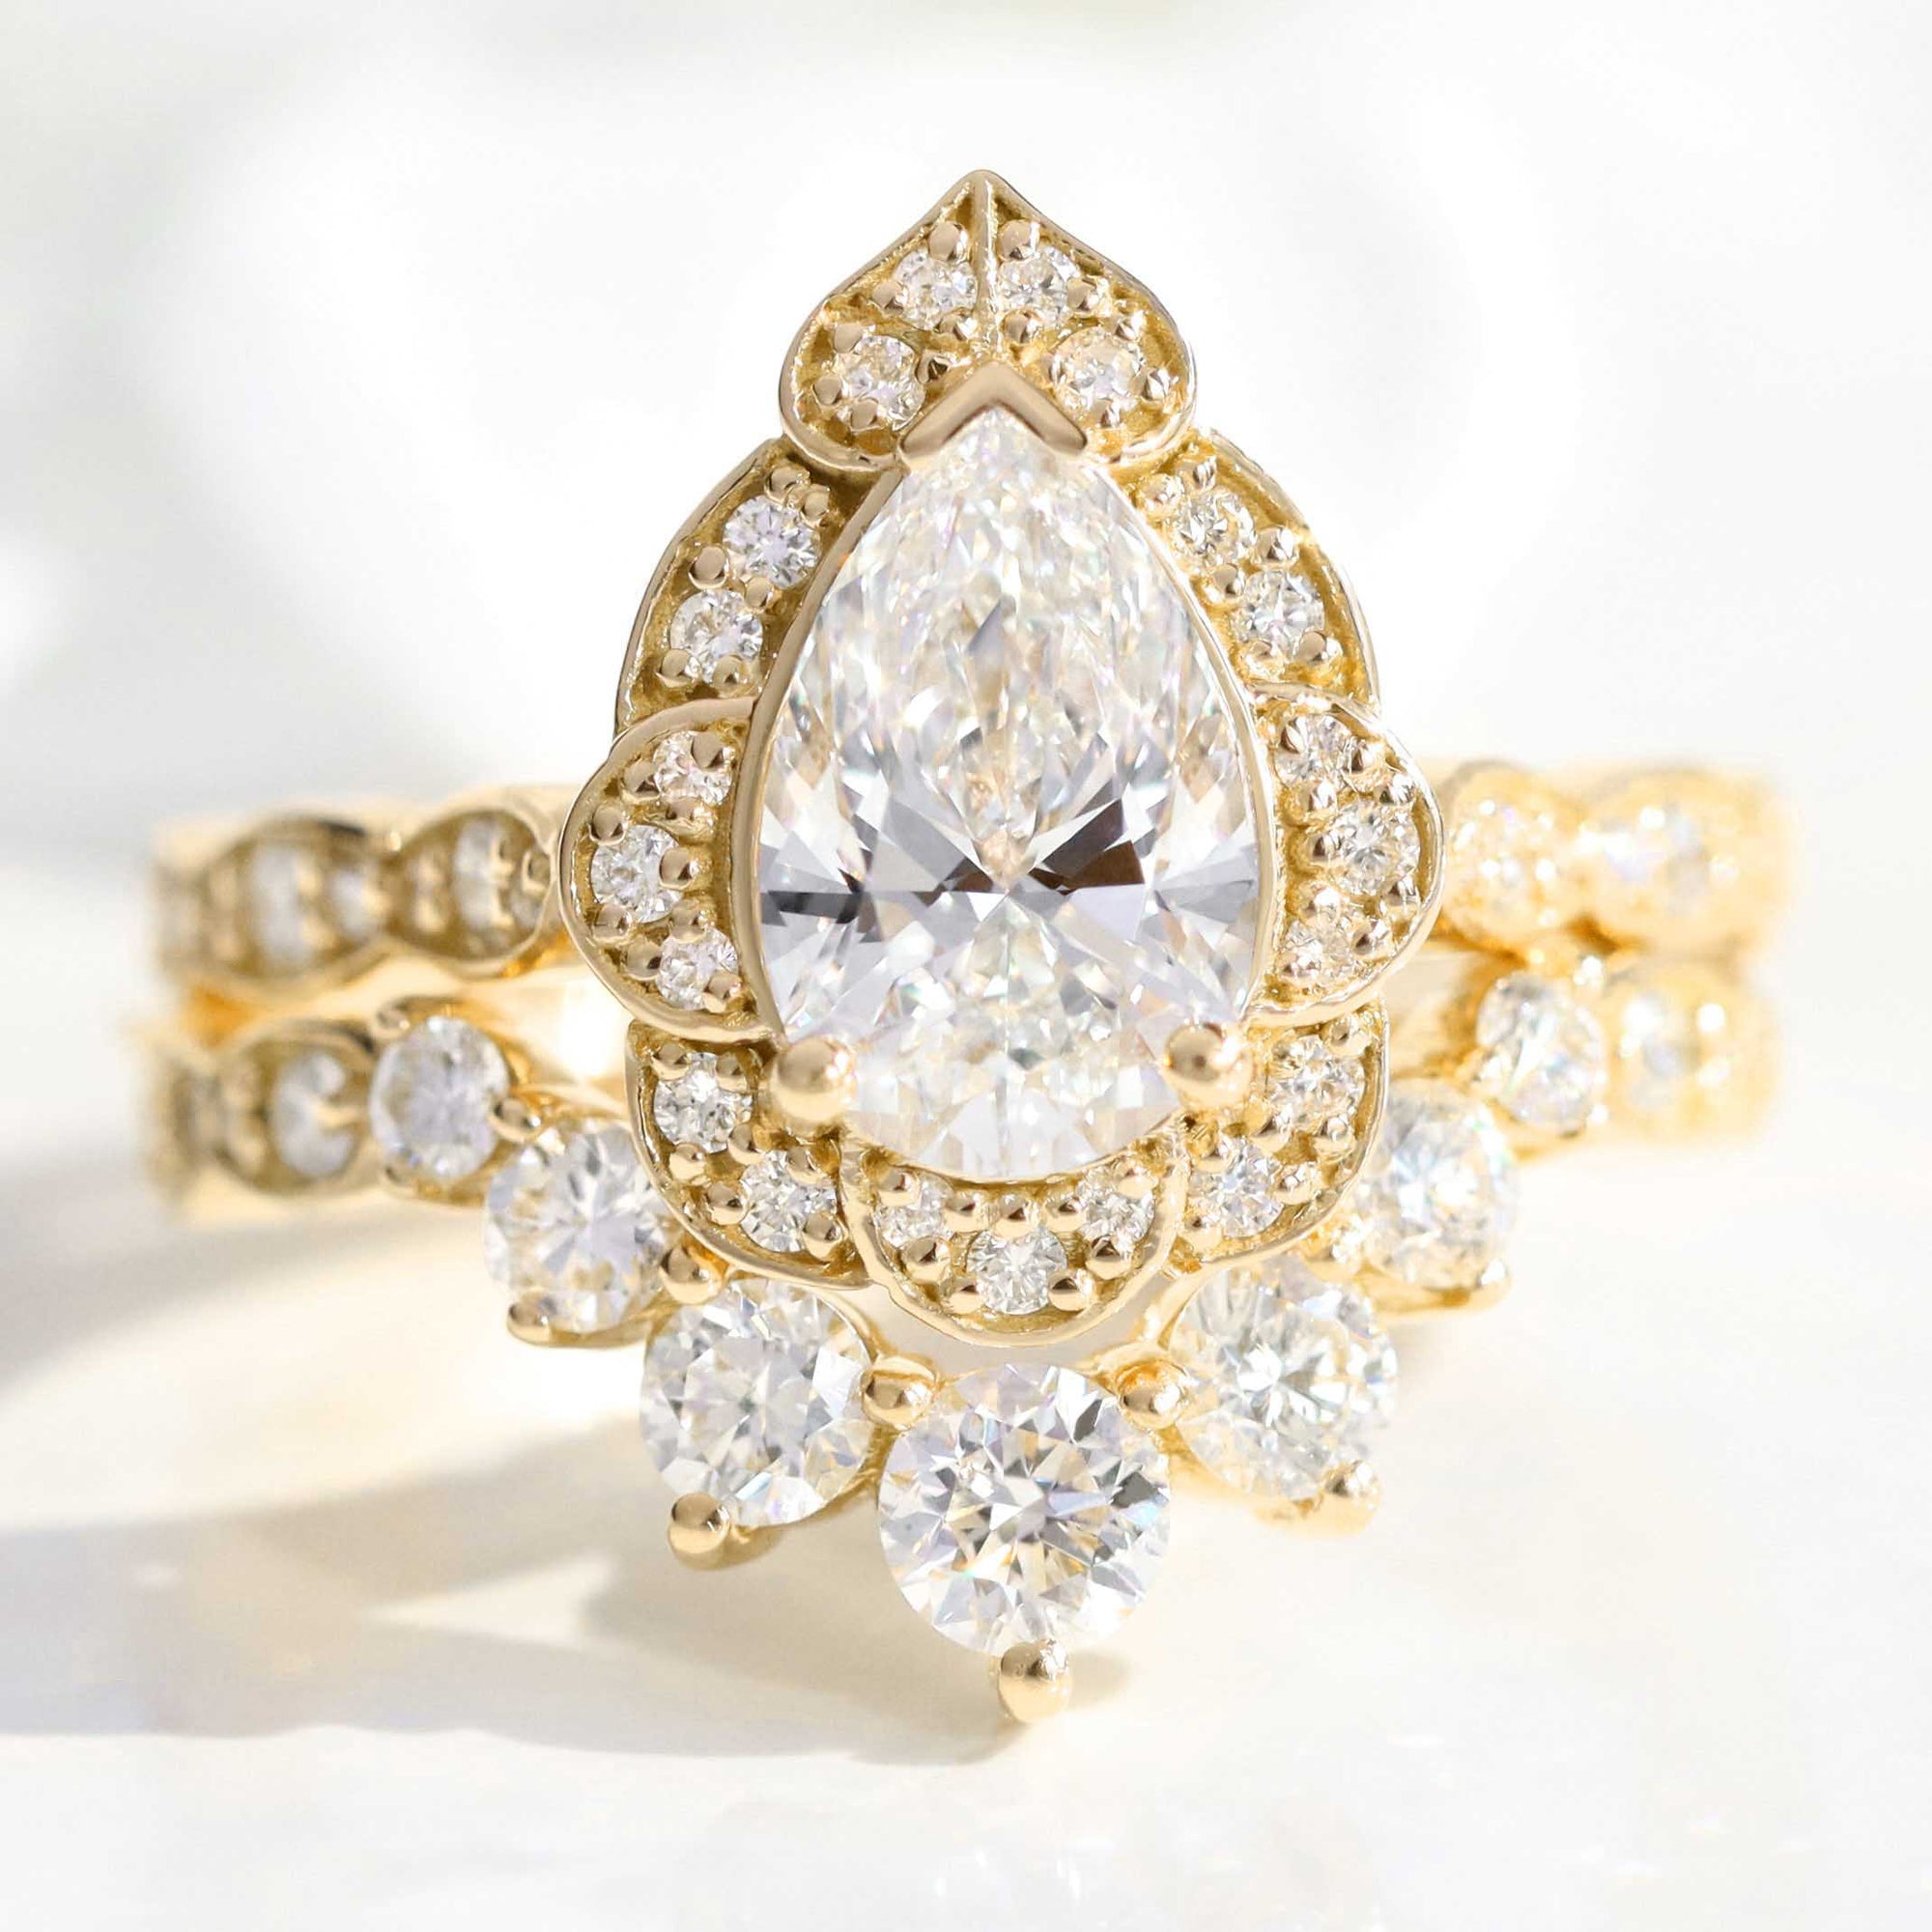 lab diamond ring stack yellow gold vintage halo pear diamond engagement ring set La More Design Jewelry